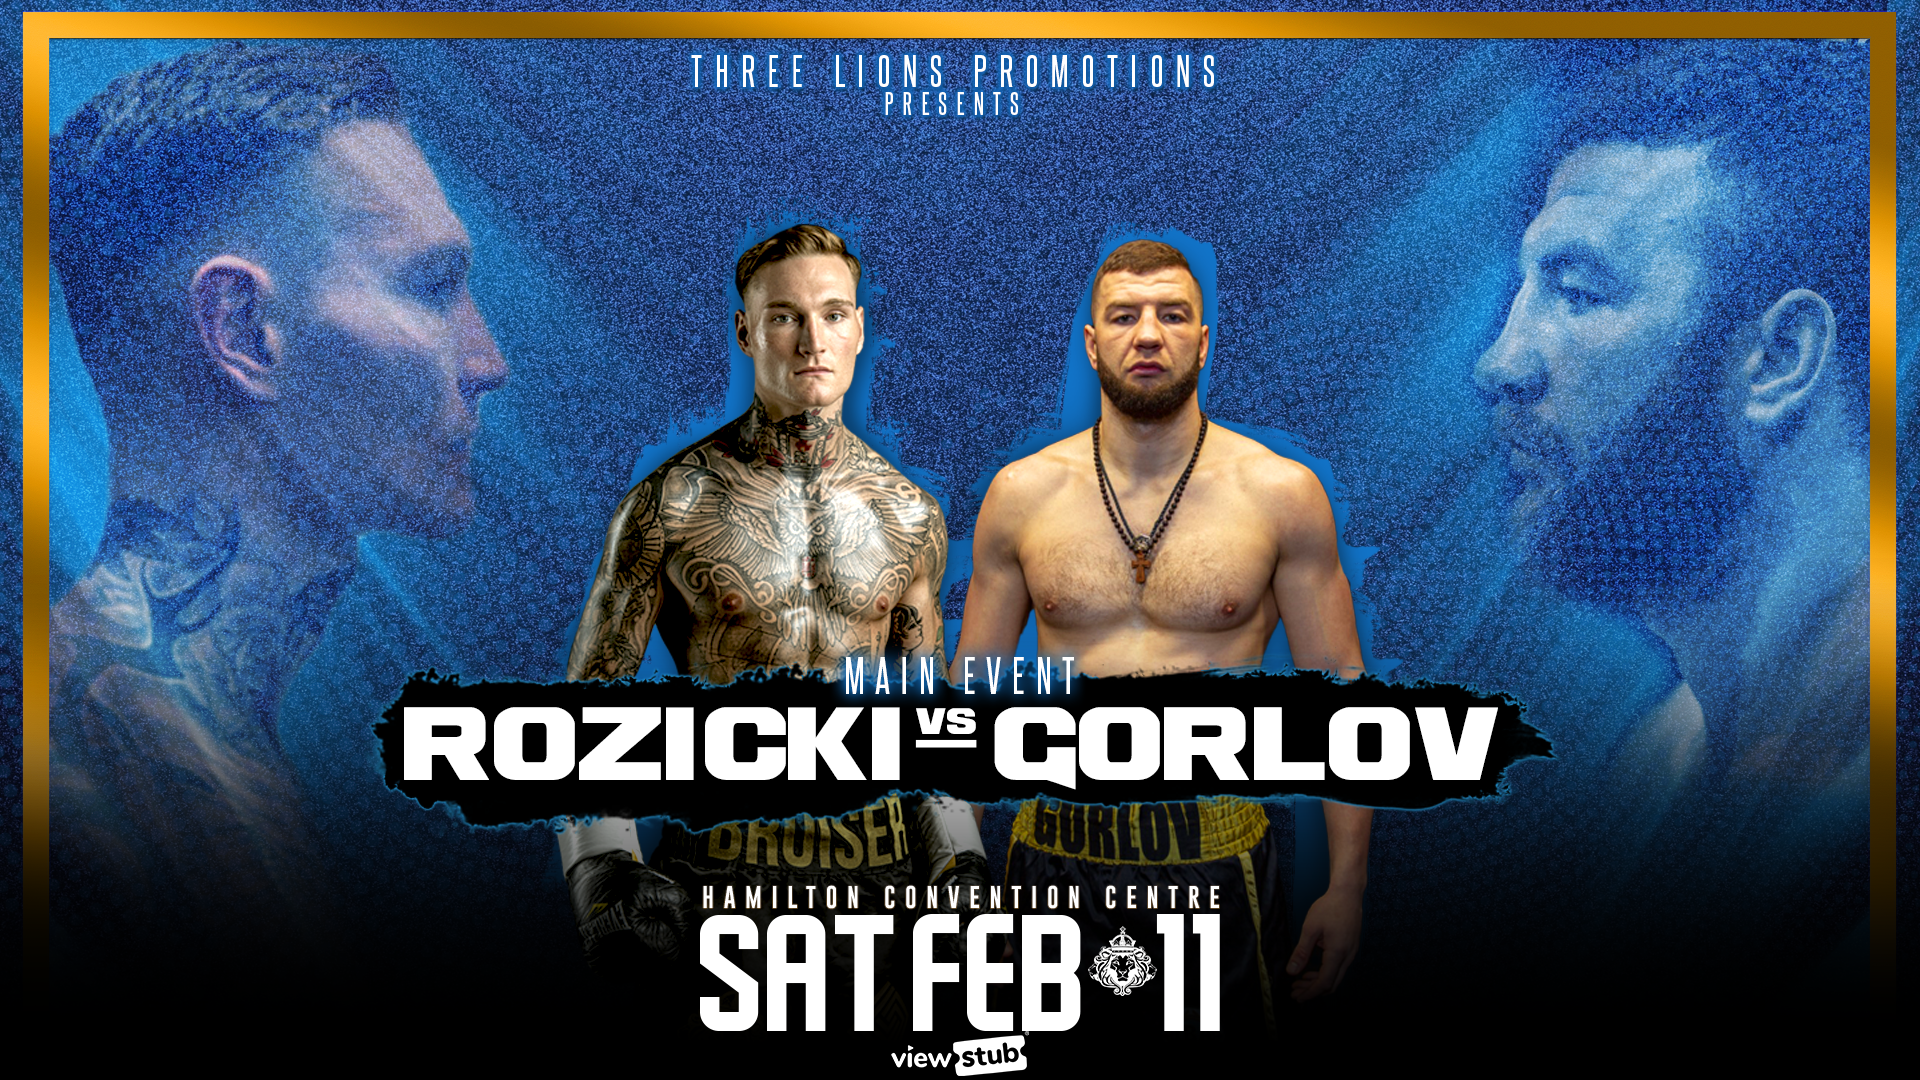 Three Lions Promotions Feb 11 - Rozicki vs Gorlov